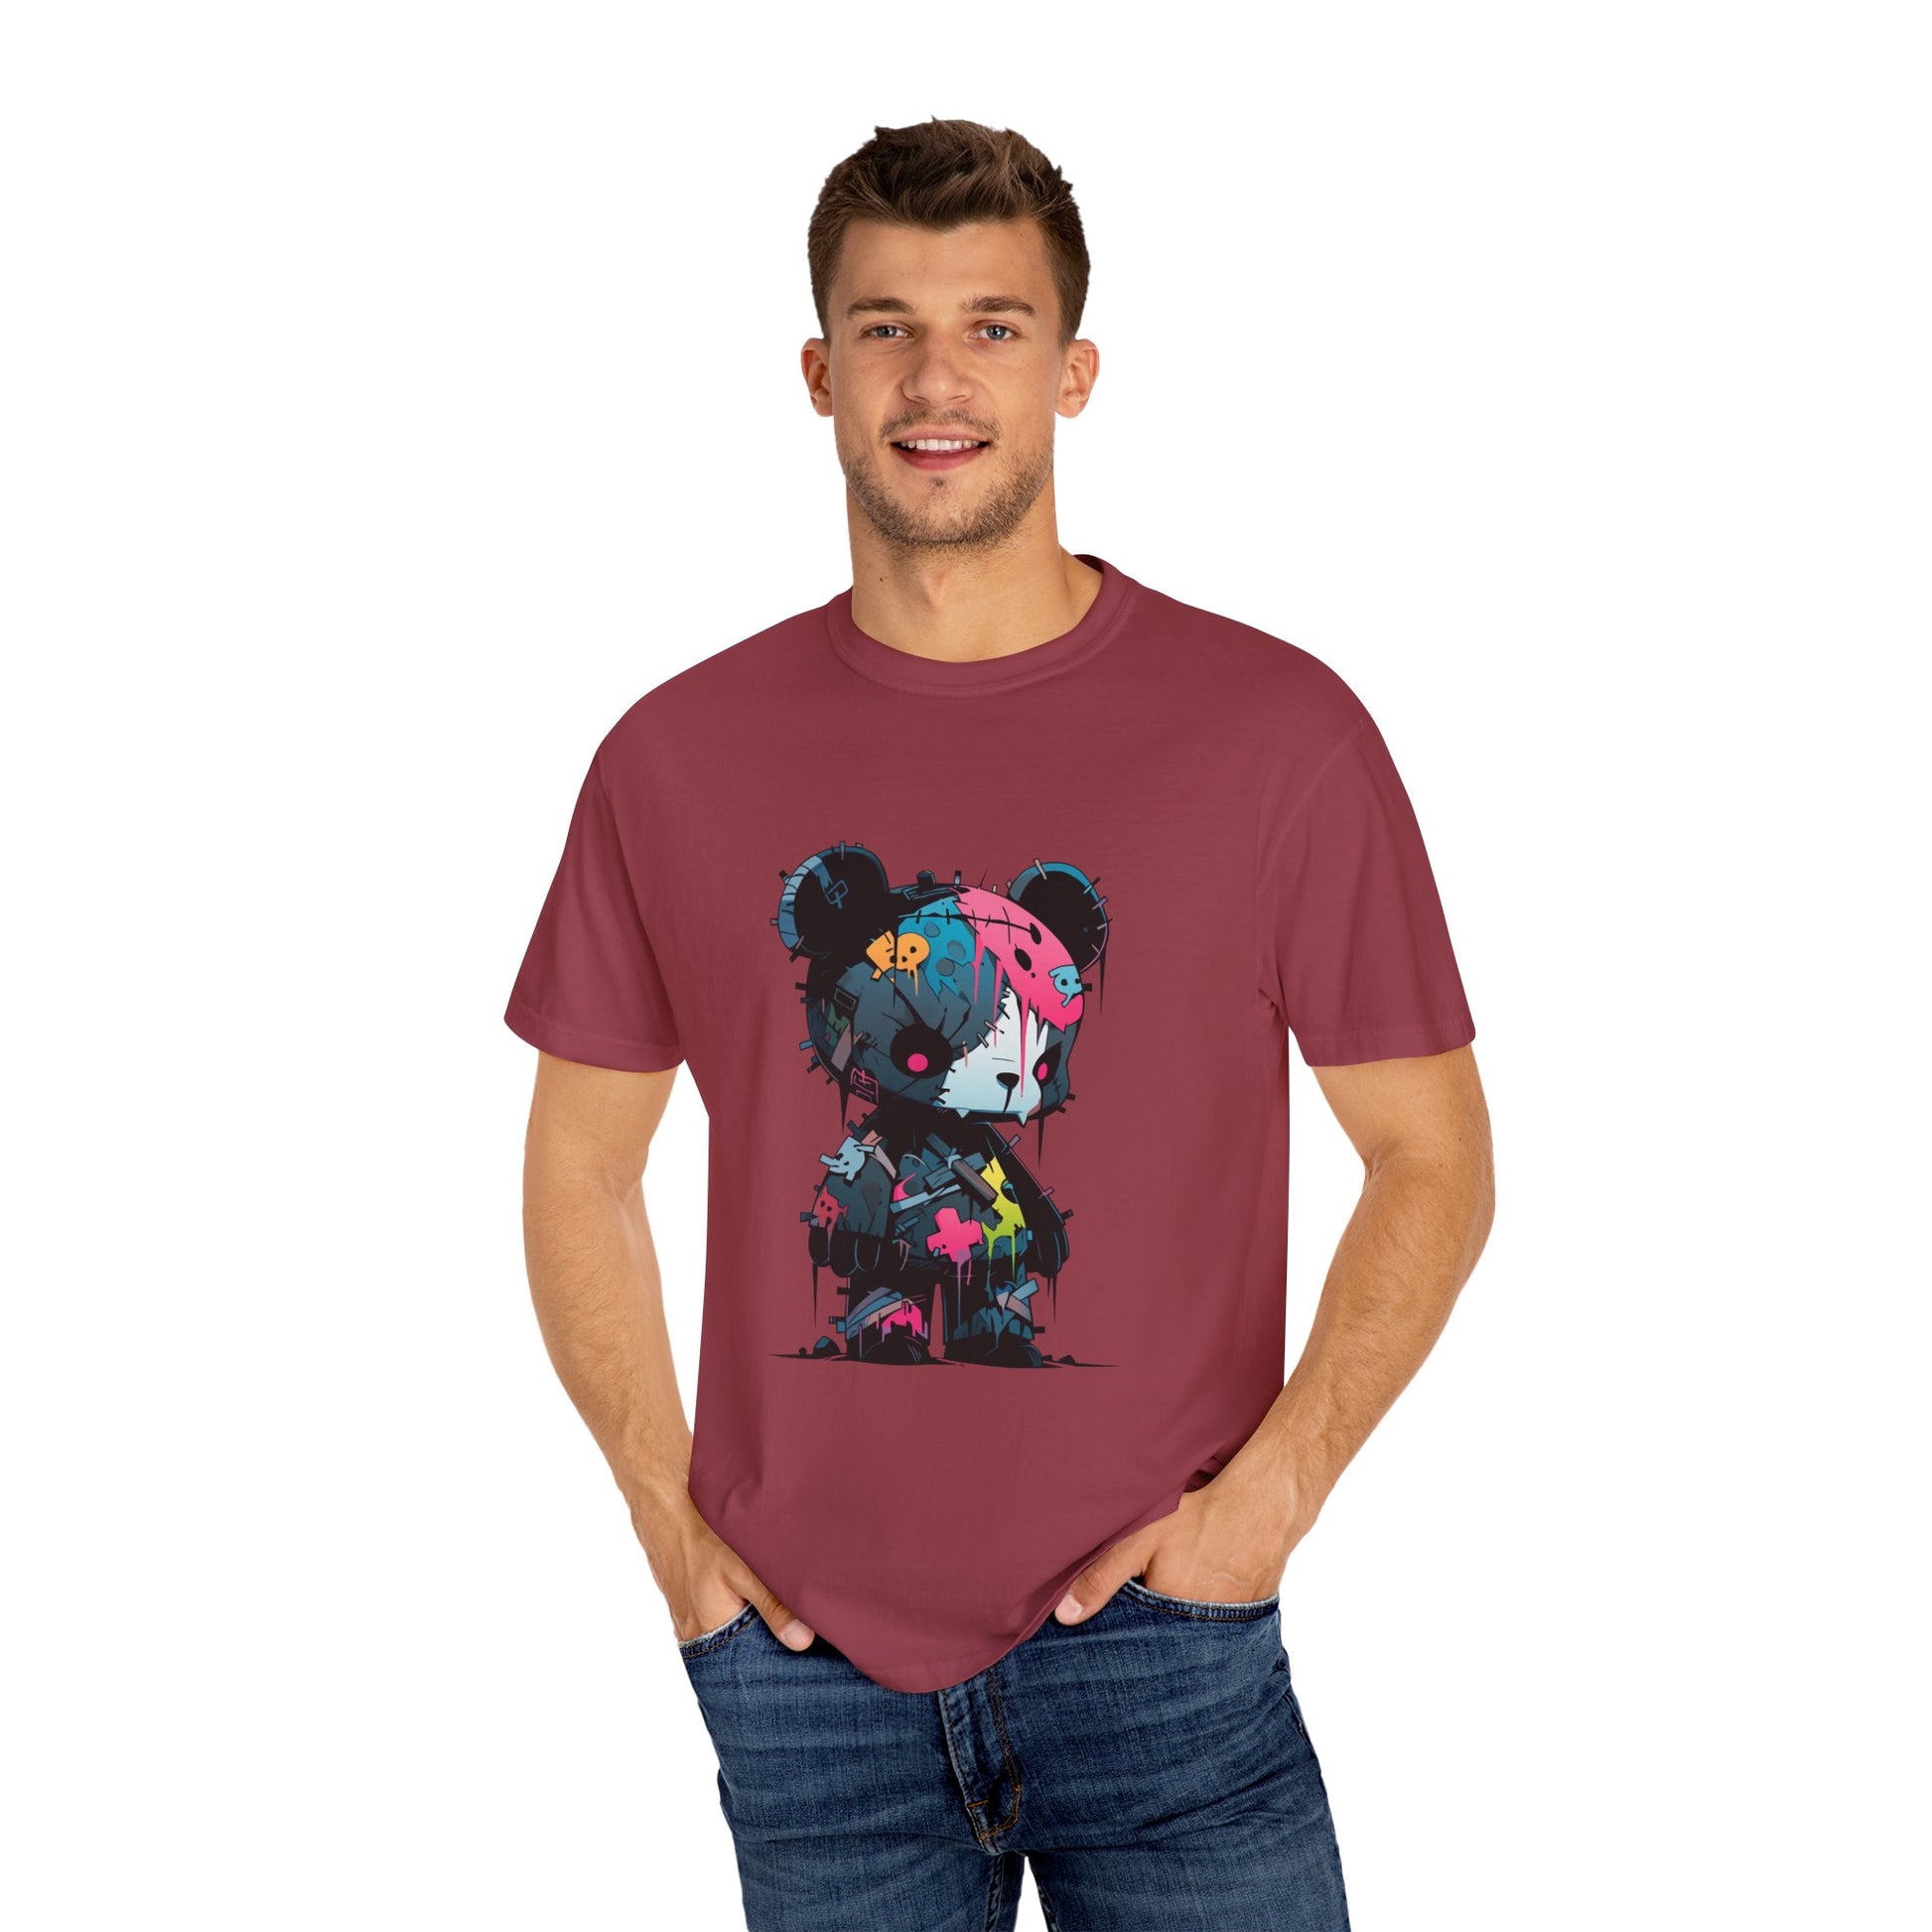 Hip Hop Teddy Bear Graphic Unisex Garment-dyed T-shirt Cotton Funny Humorous Graphic Soft Premium Unisex Men Women Chili T-shirt Birthday Gift-36